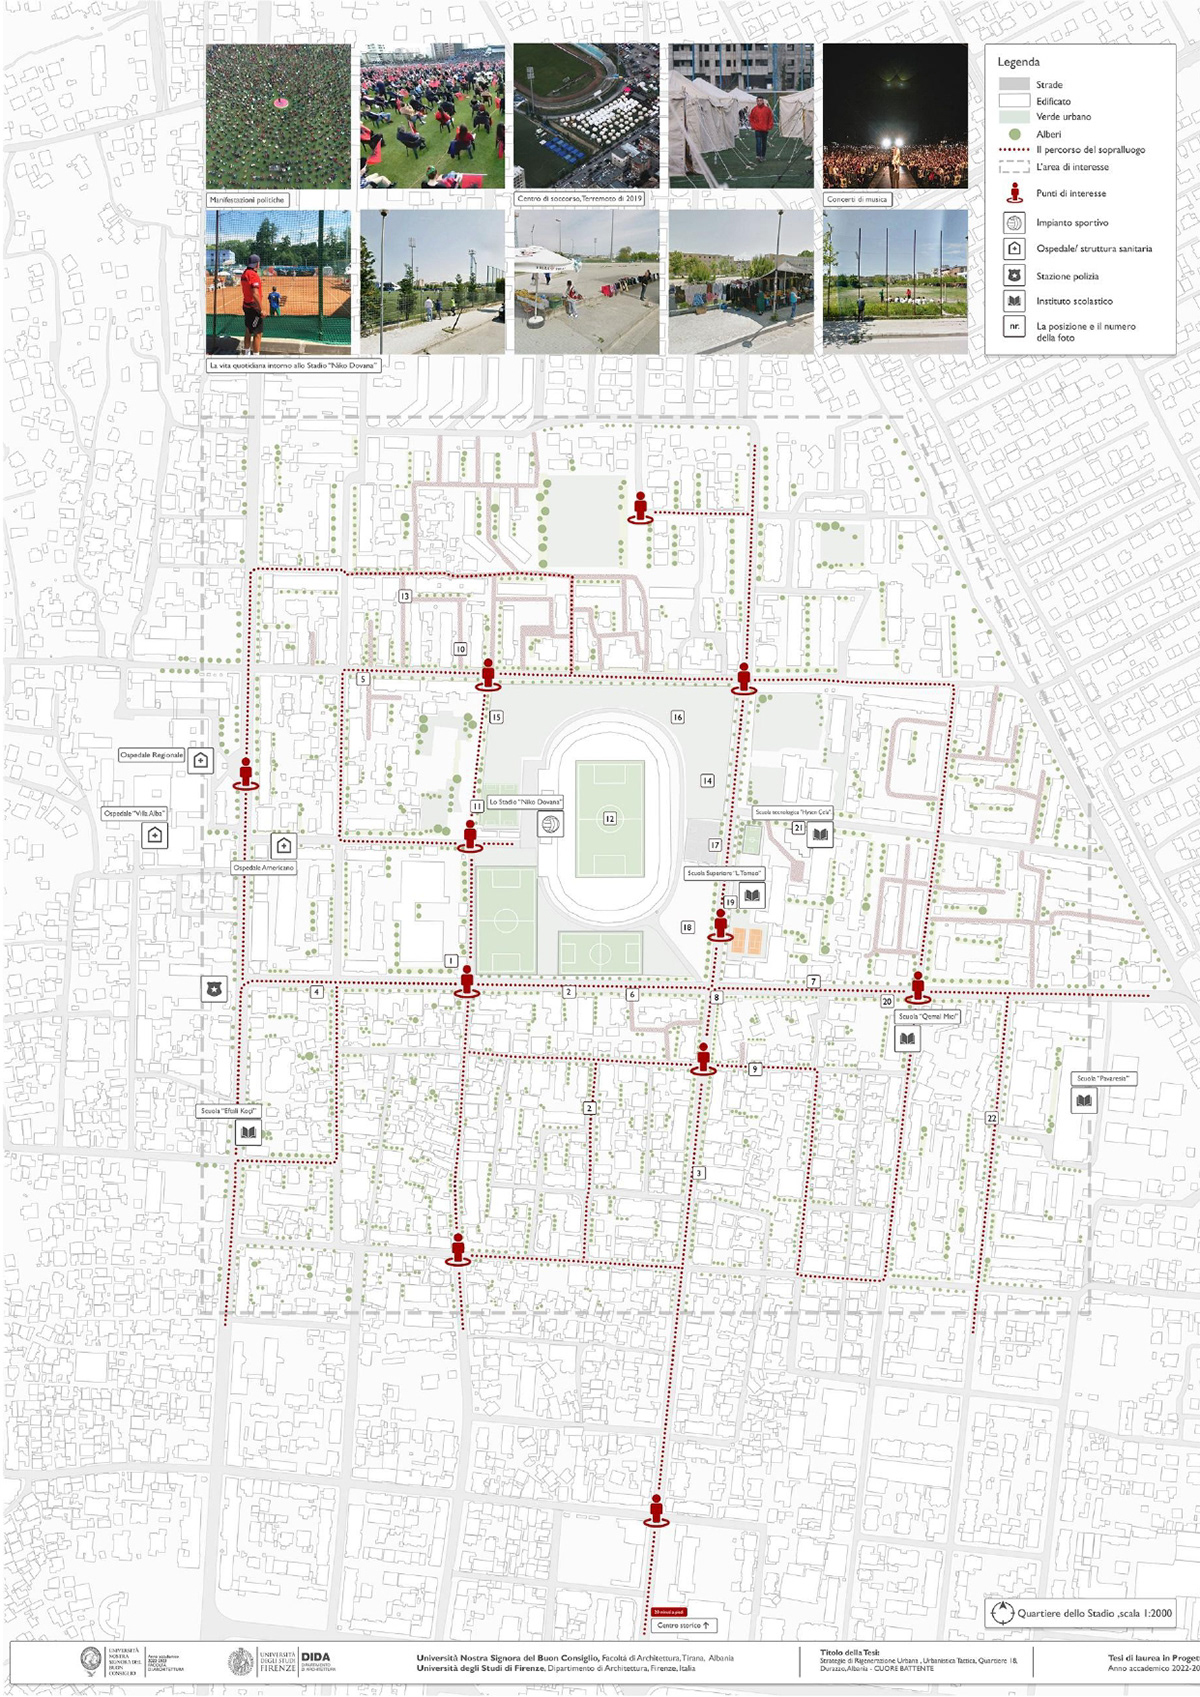 architecture Render Urban Design Landscape tactical urbanism urban planning Masterplan visualization Thesis Project